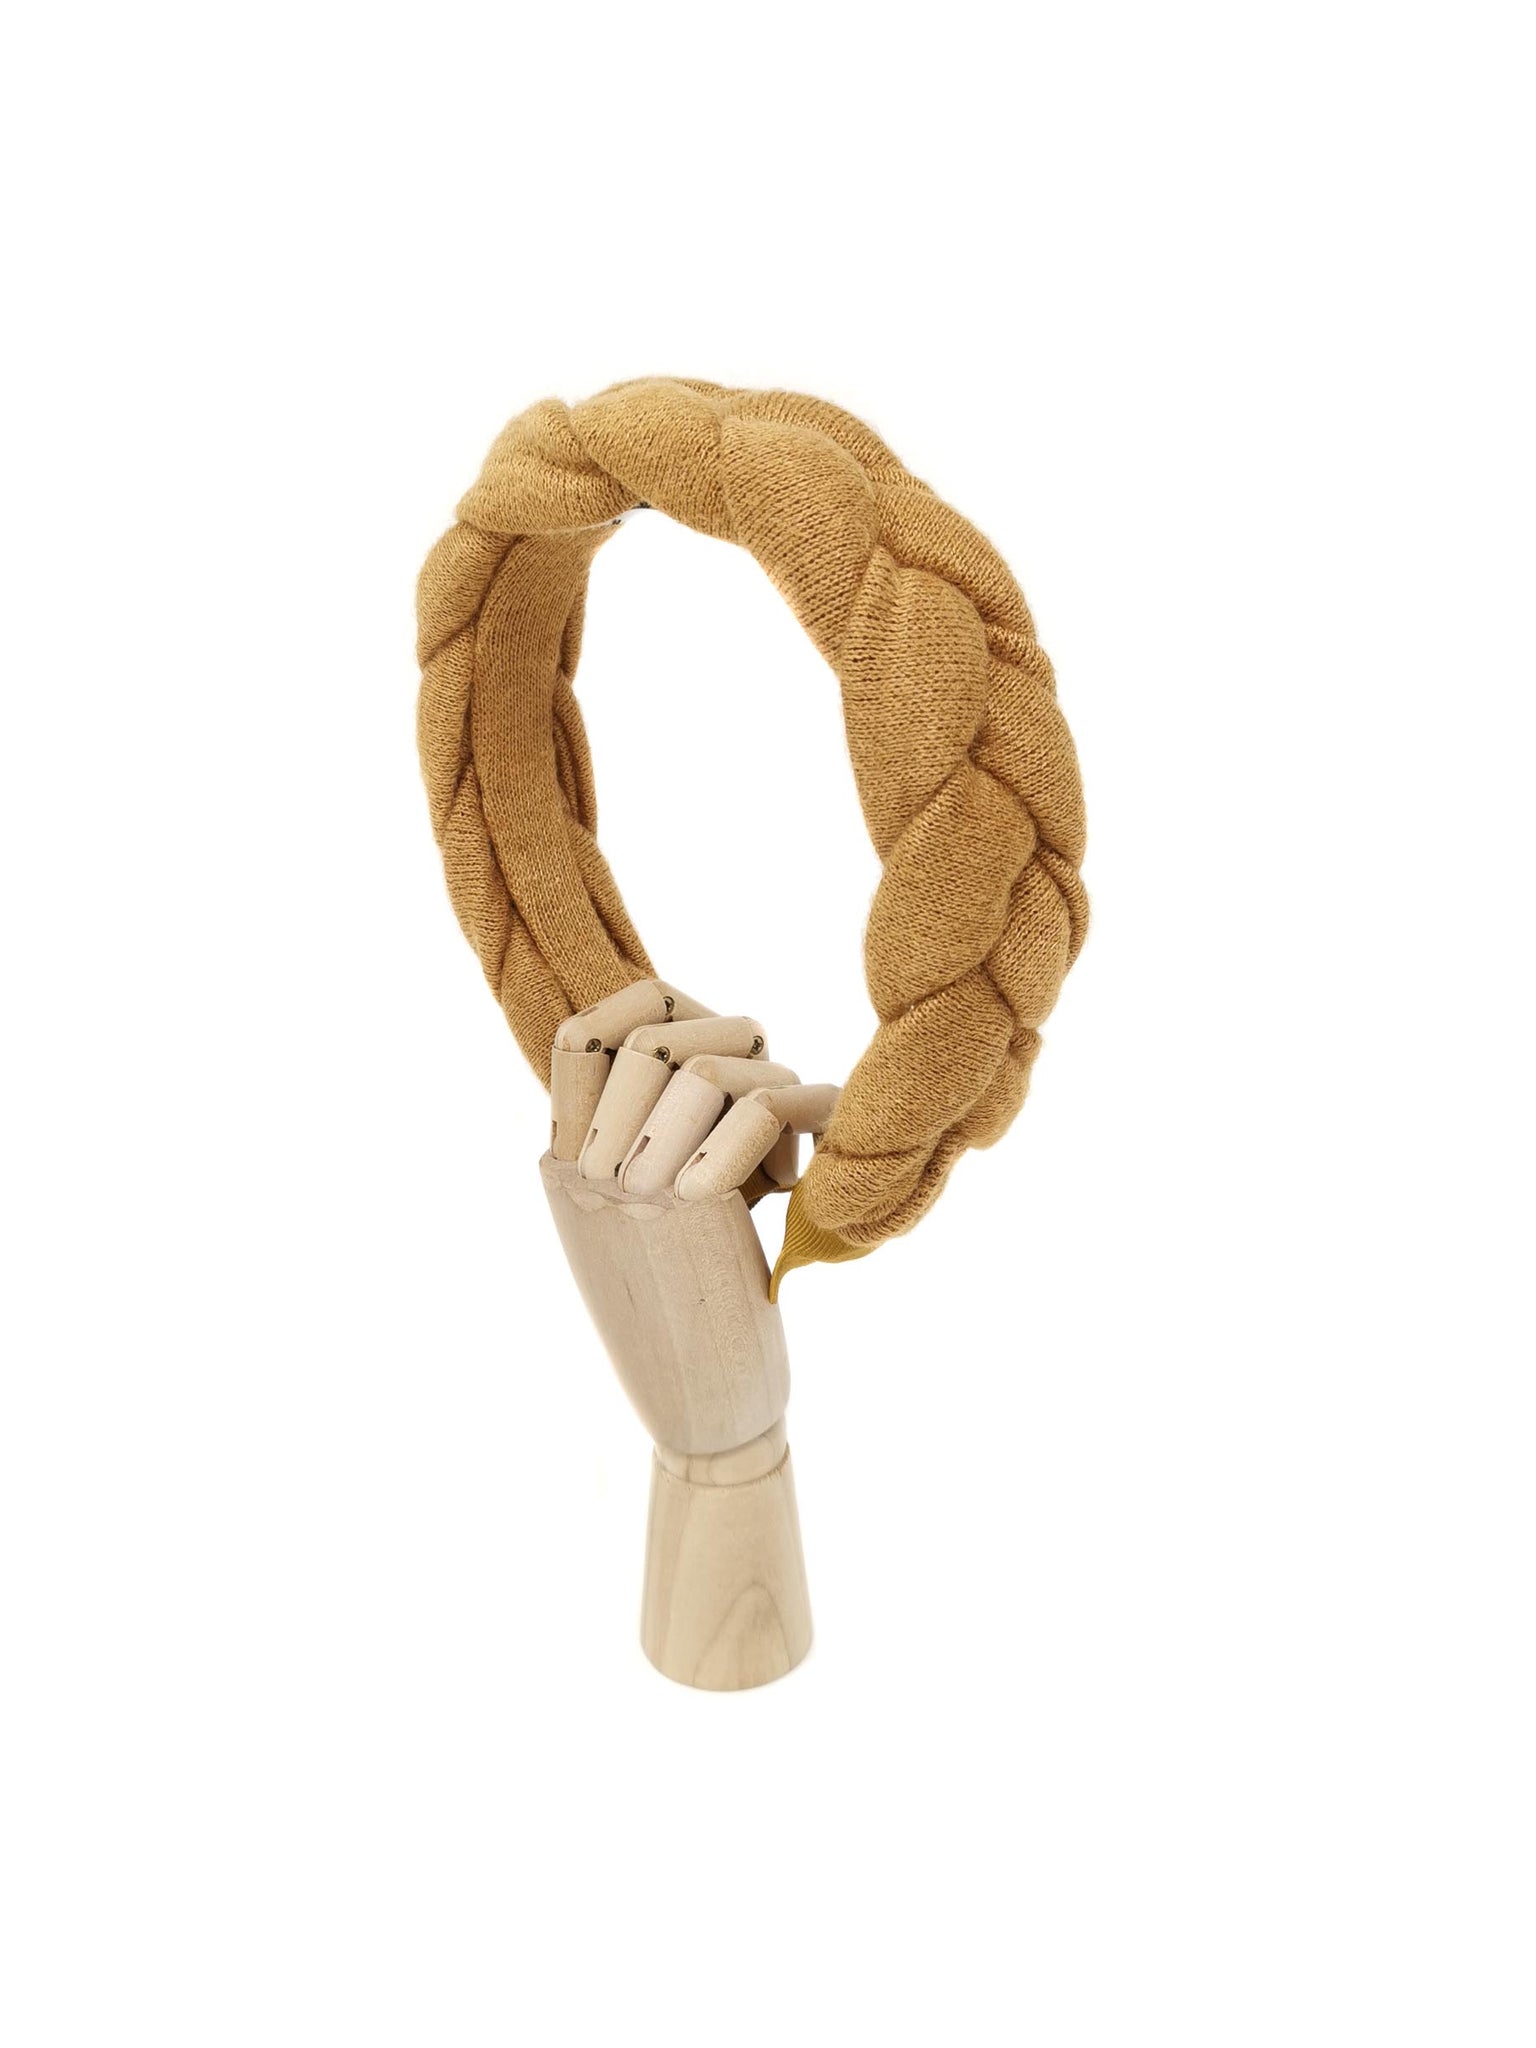 "Frida" beige wool braided hariband